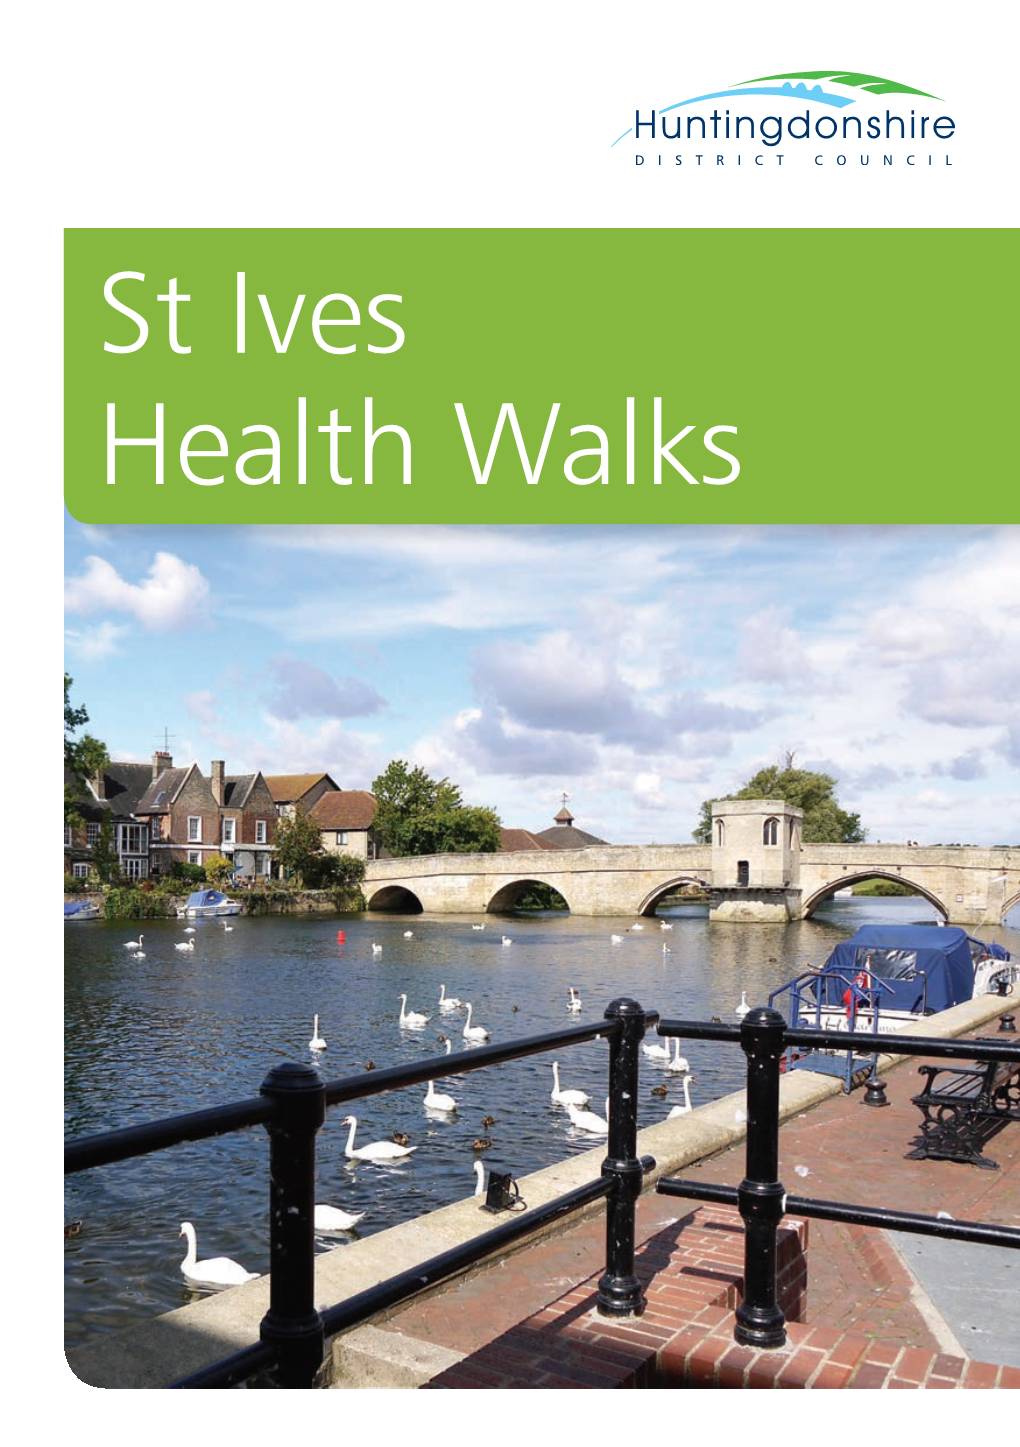 St. Ives Health Walks